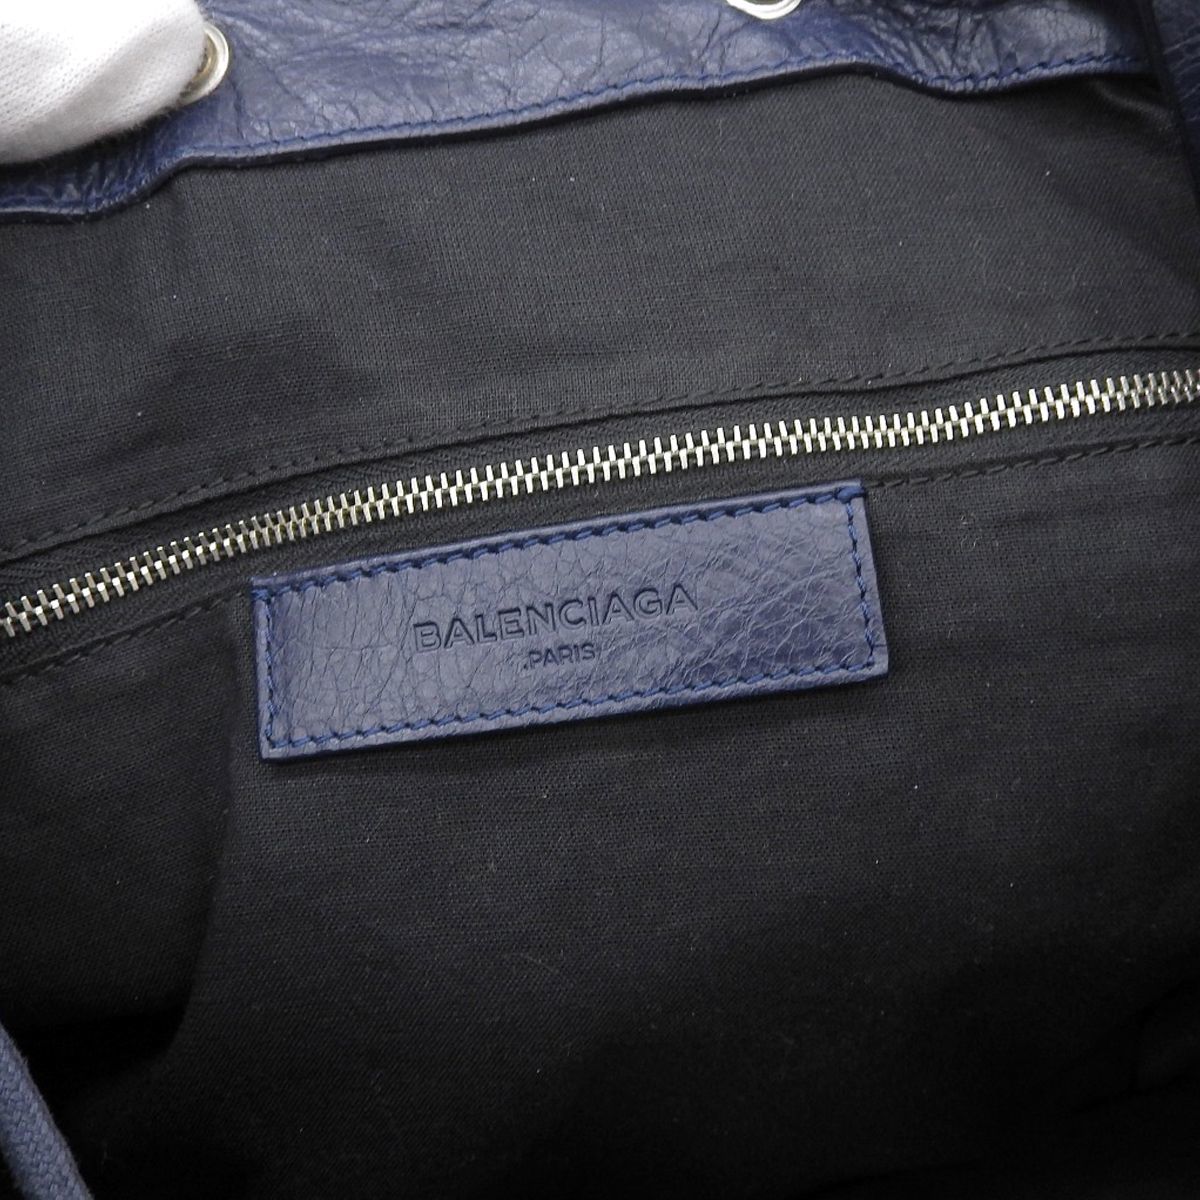  Balenciaga BALENCIAGA рюкзак рюкзак кожа темно-синий серия мужской 4125